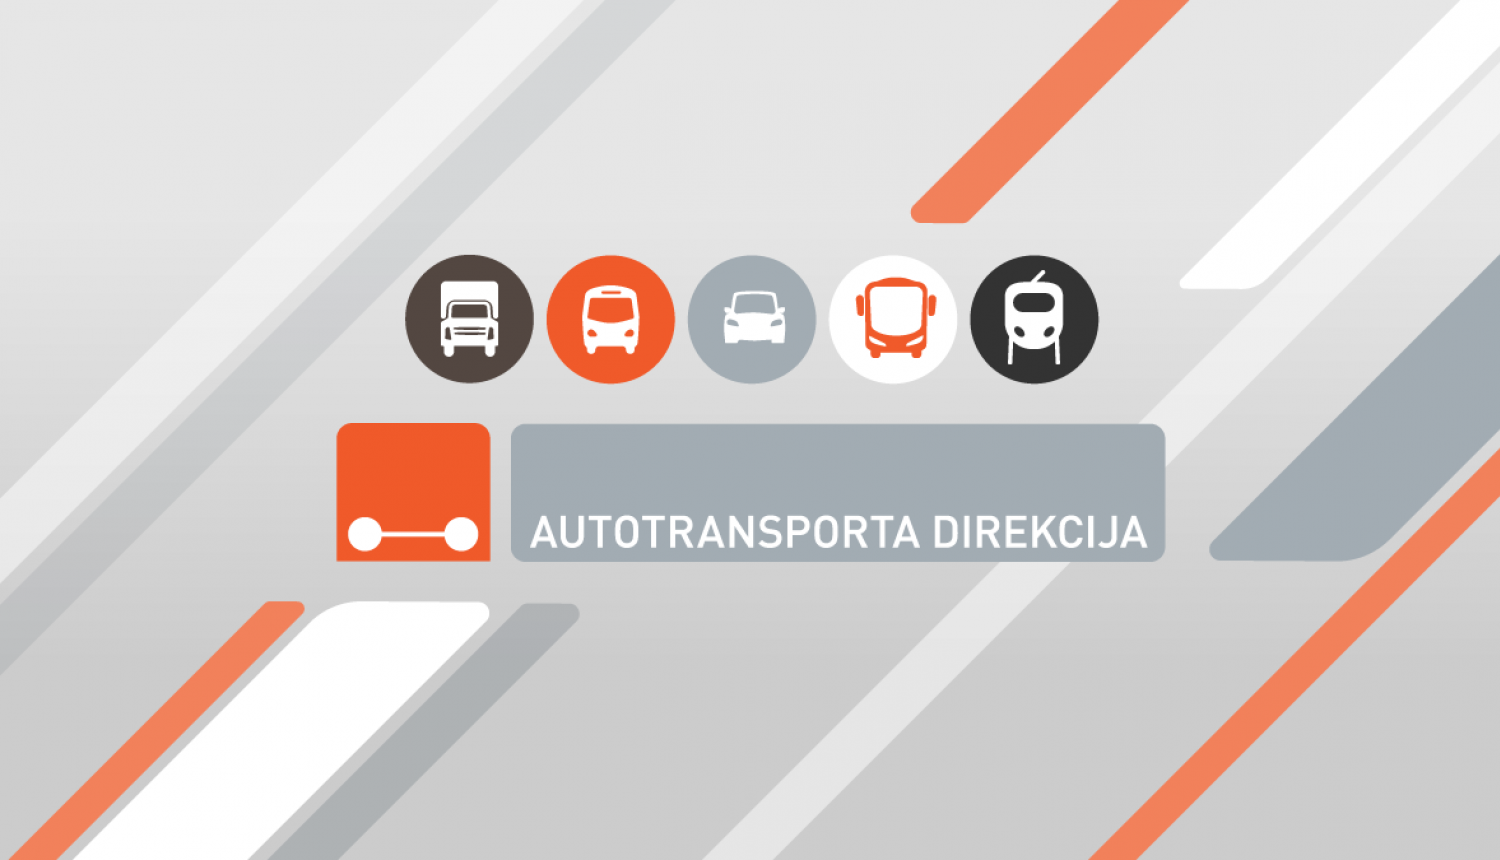 Autotransporta direkcijas logo